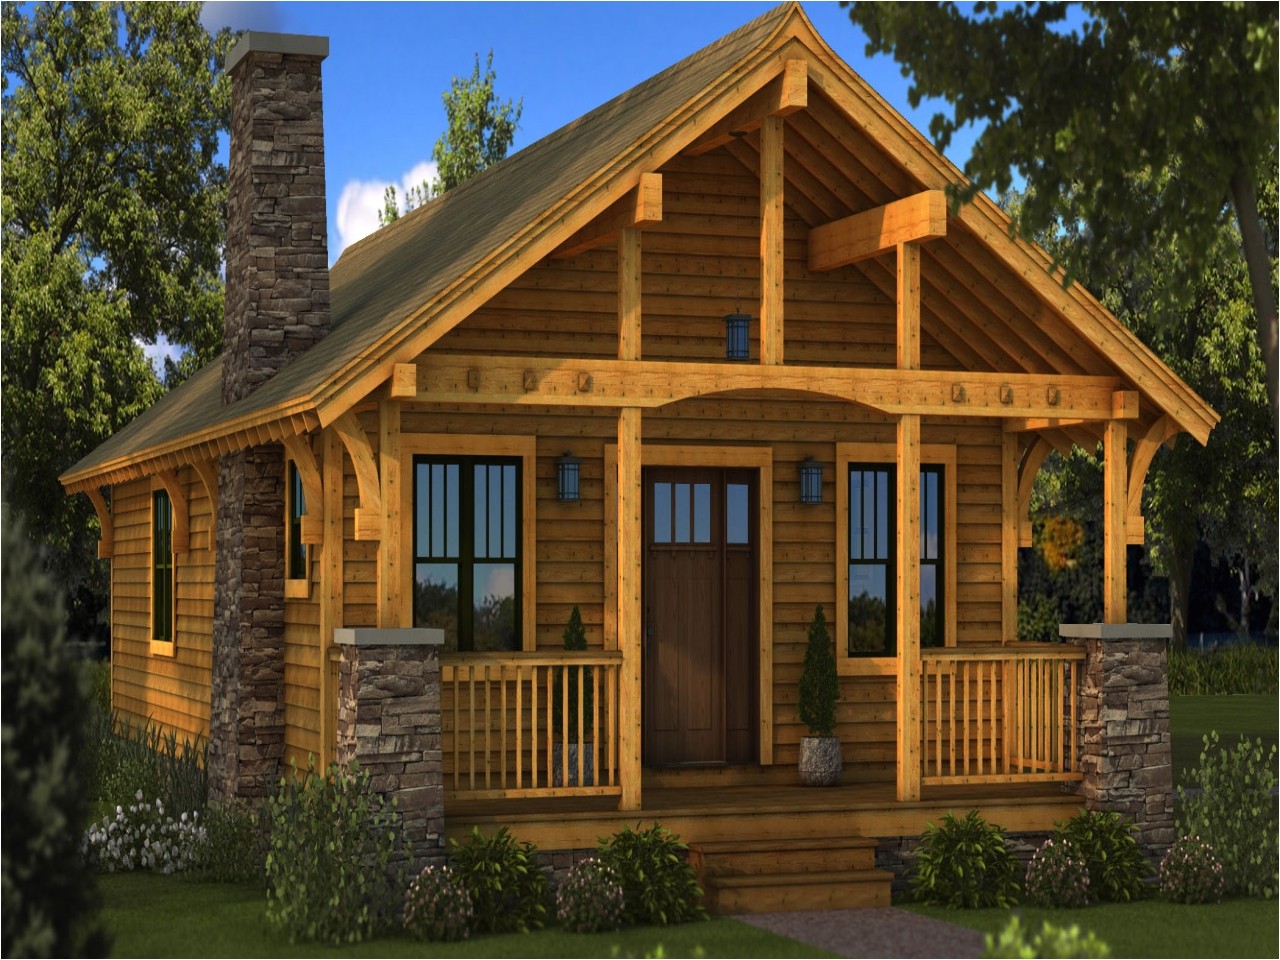 Small Log Homes Plans Small Rustic Log Cabins Small Log Cabin Homes Plans One